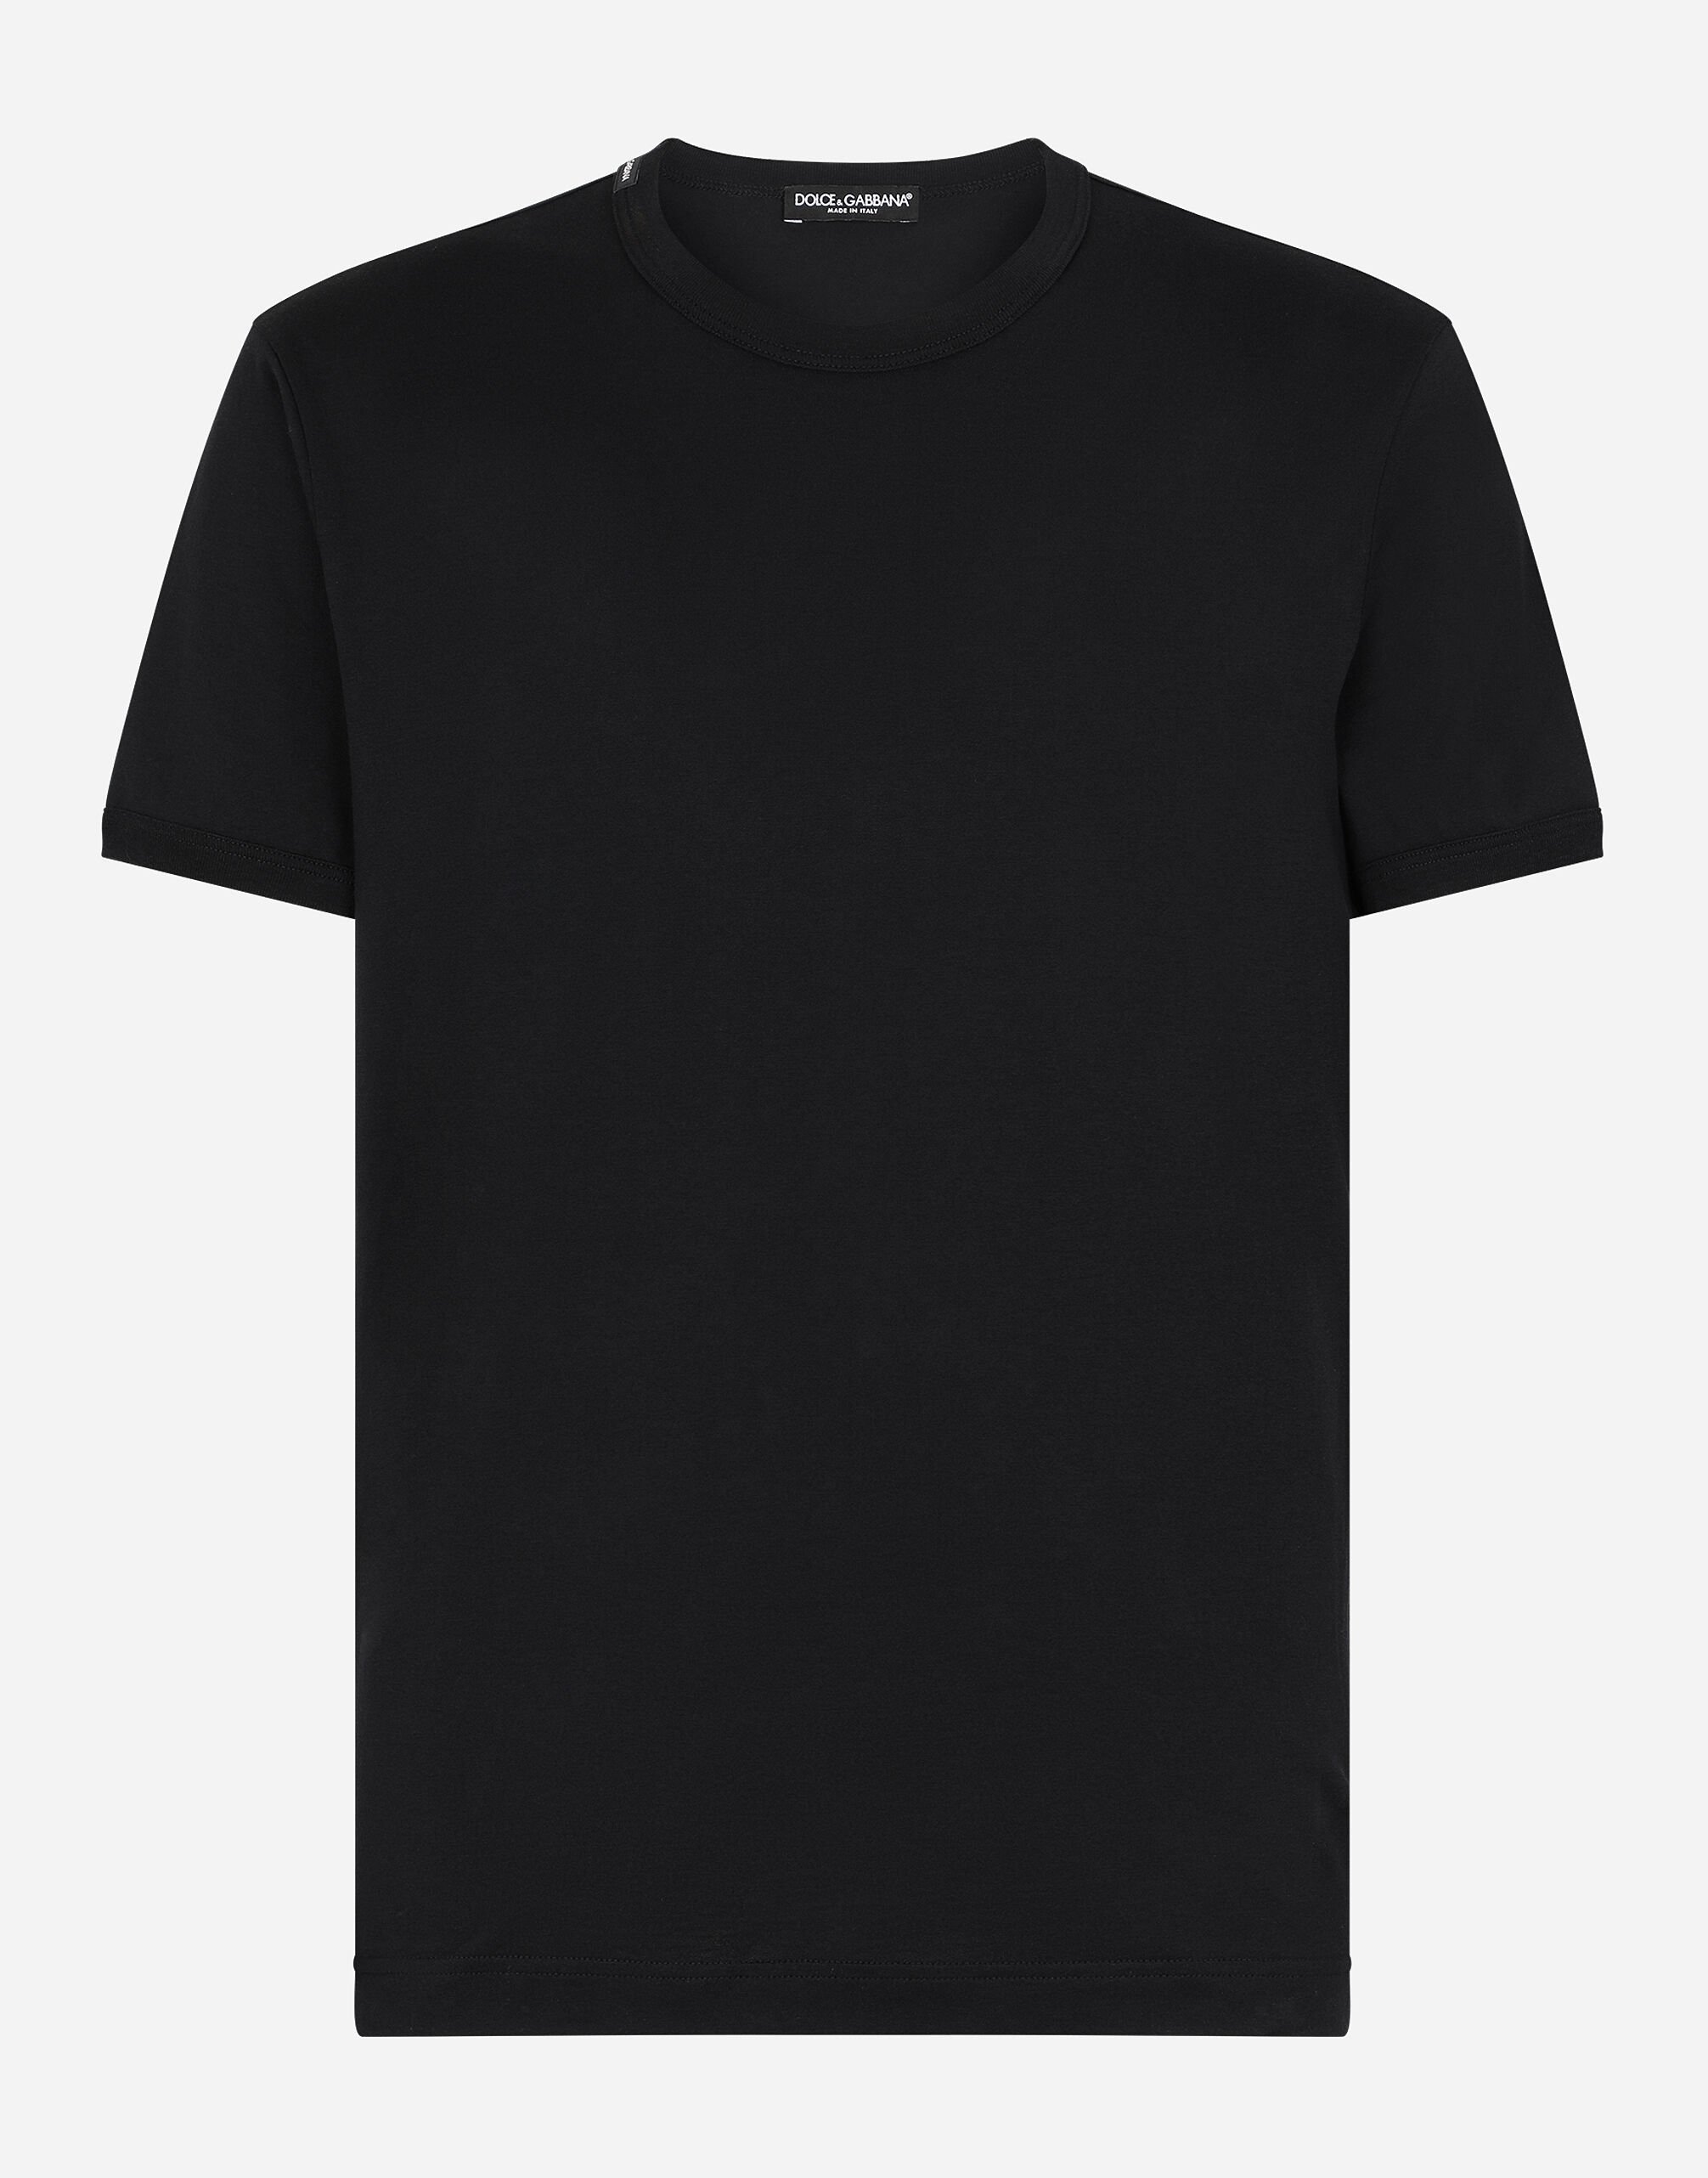 Dolce&Gabbana T-shirt cotone con logo Nero GY6IETFUFJR